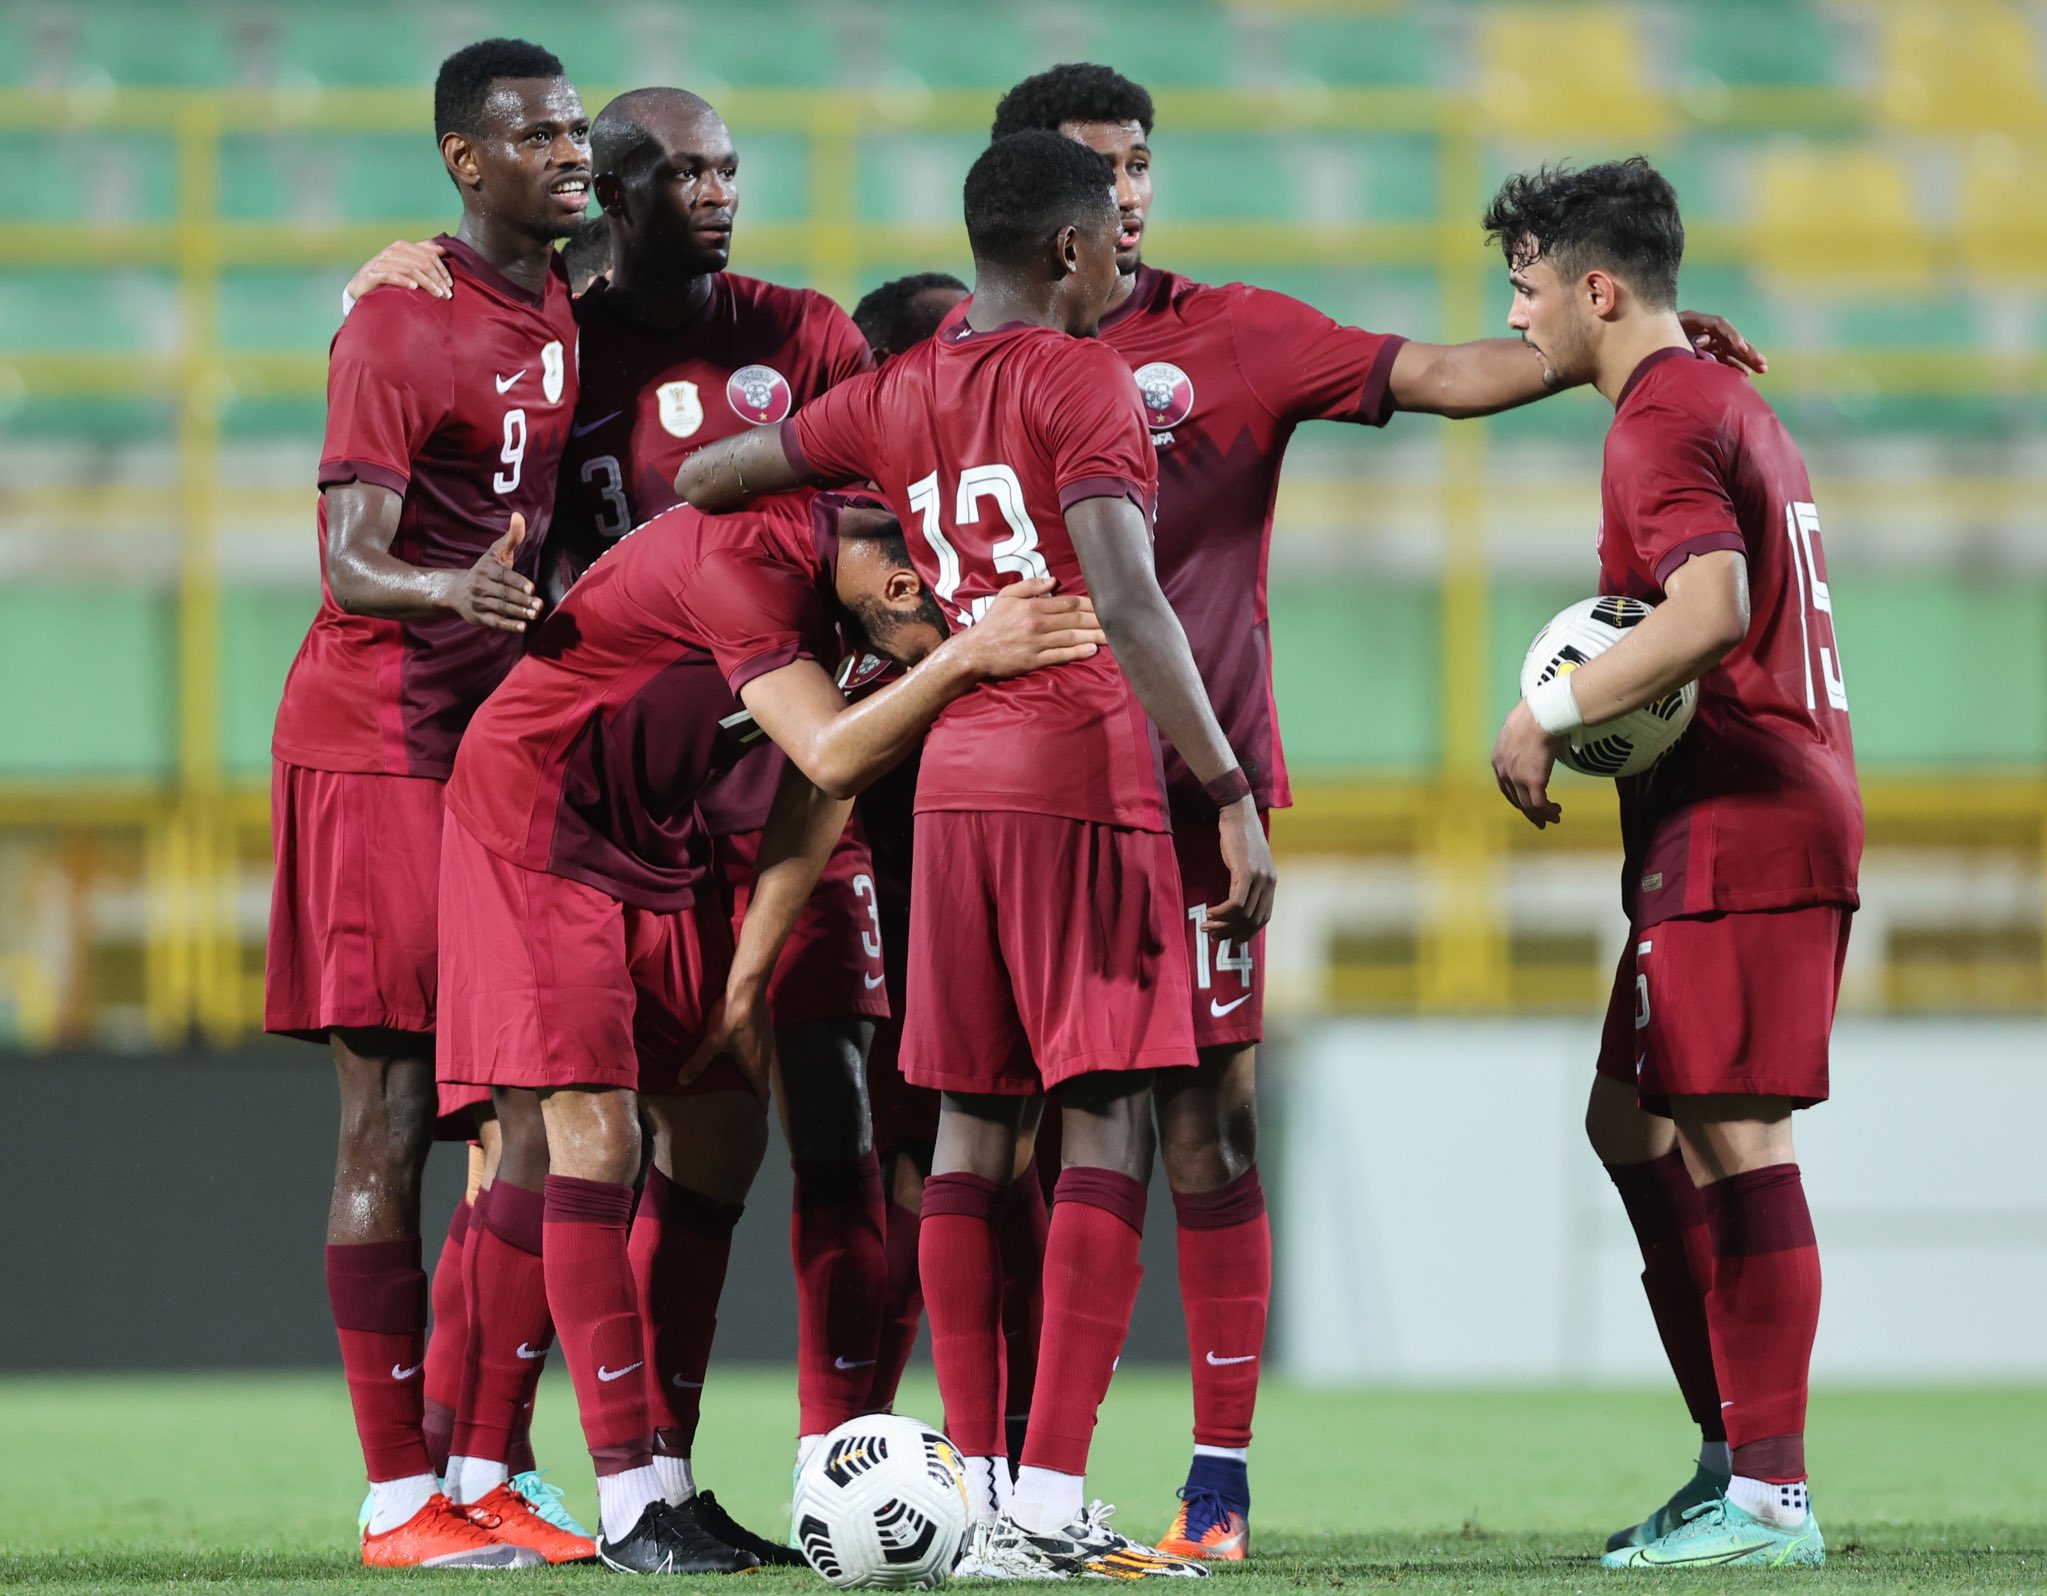 Qatar entering Gold Cup on a winning streak